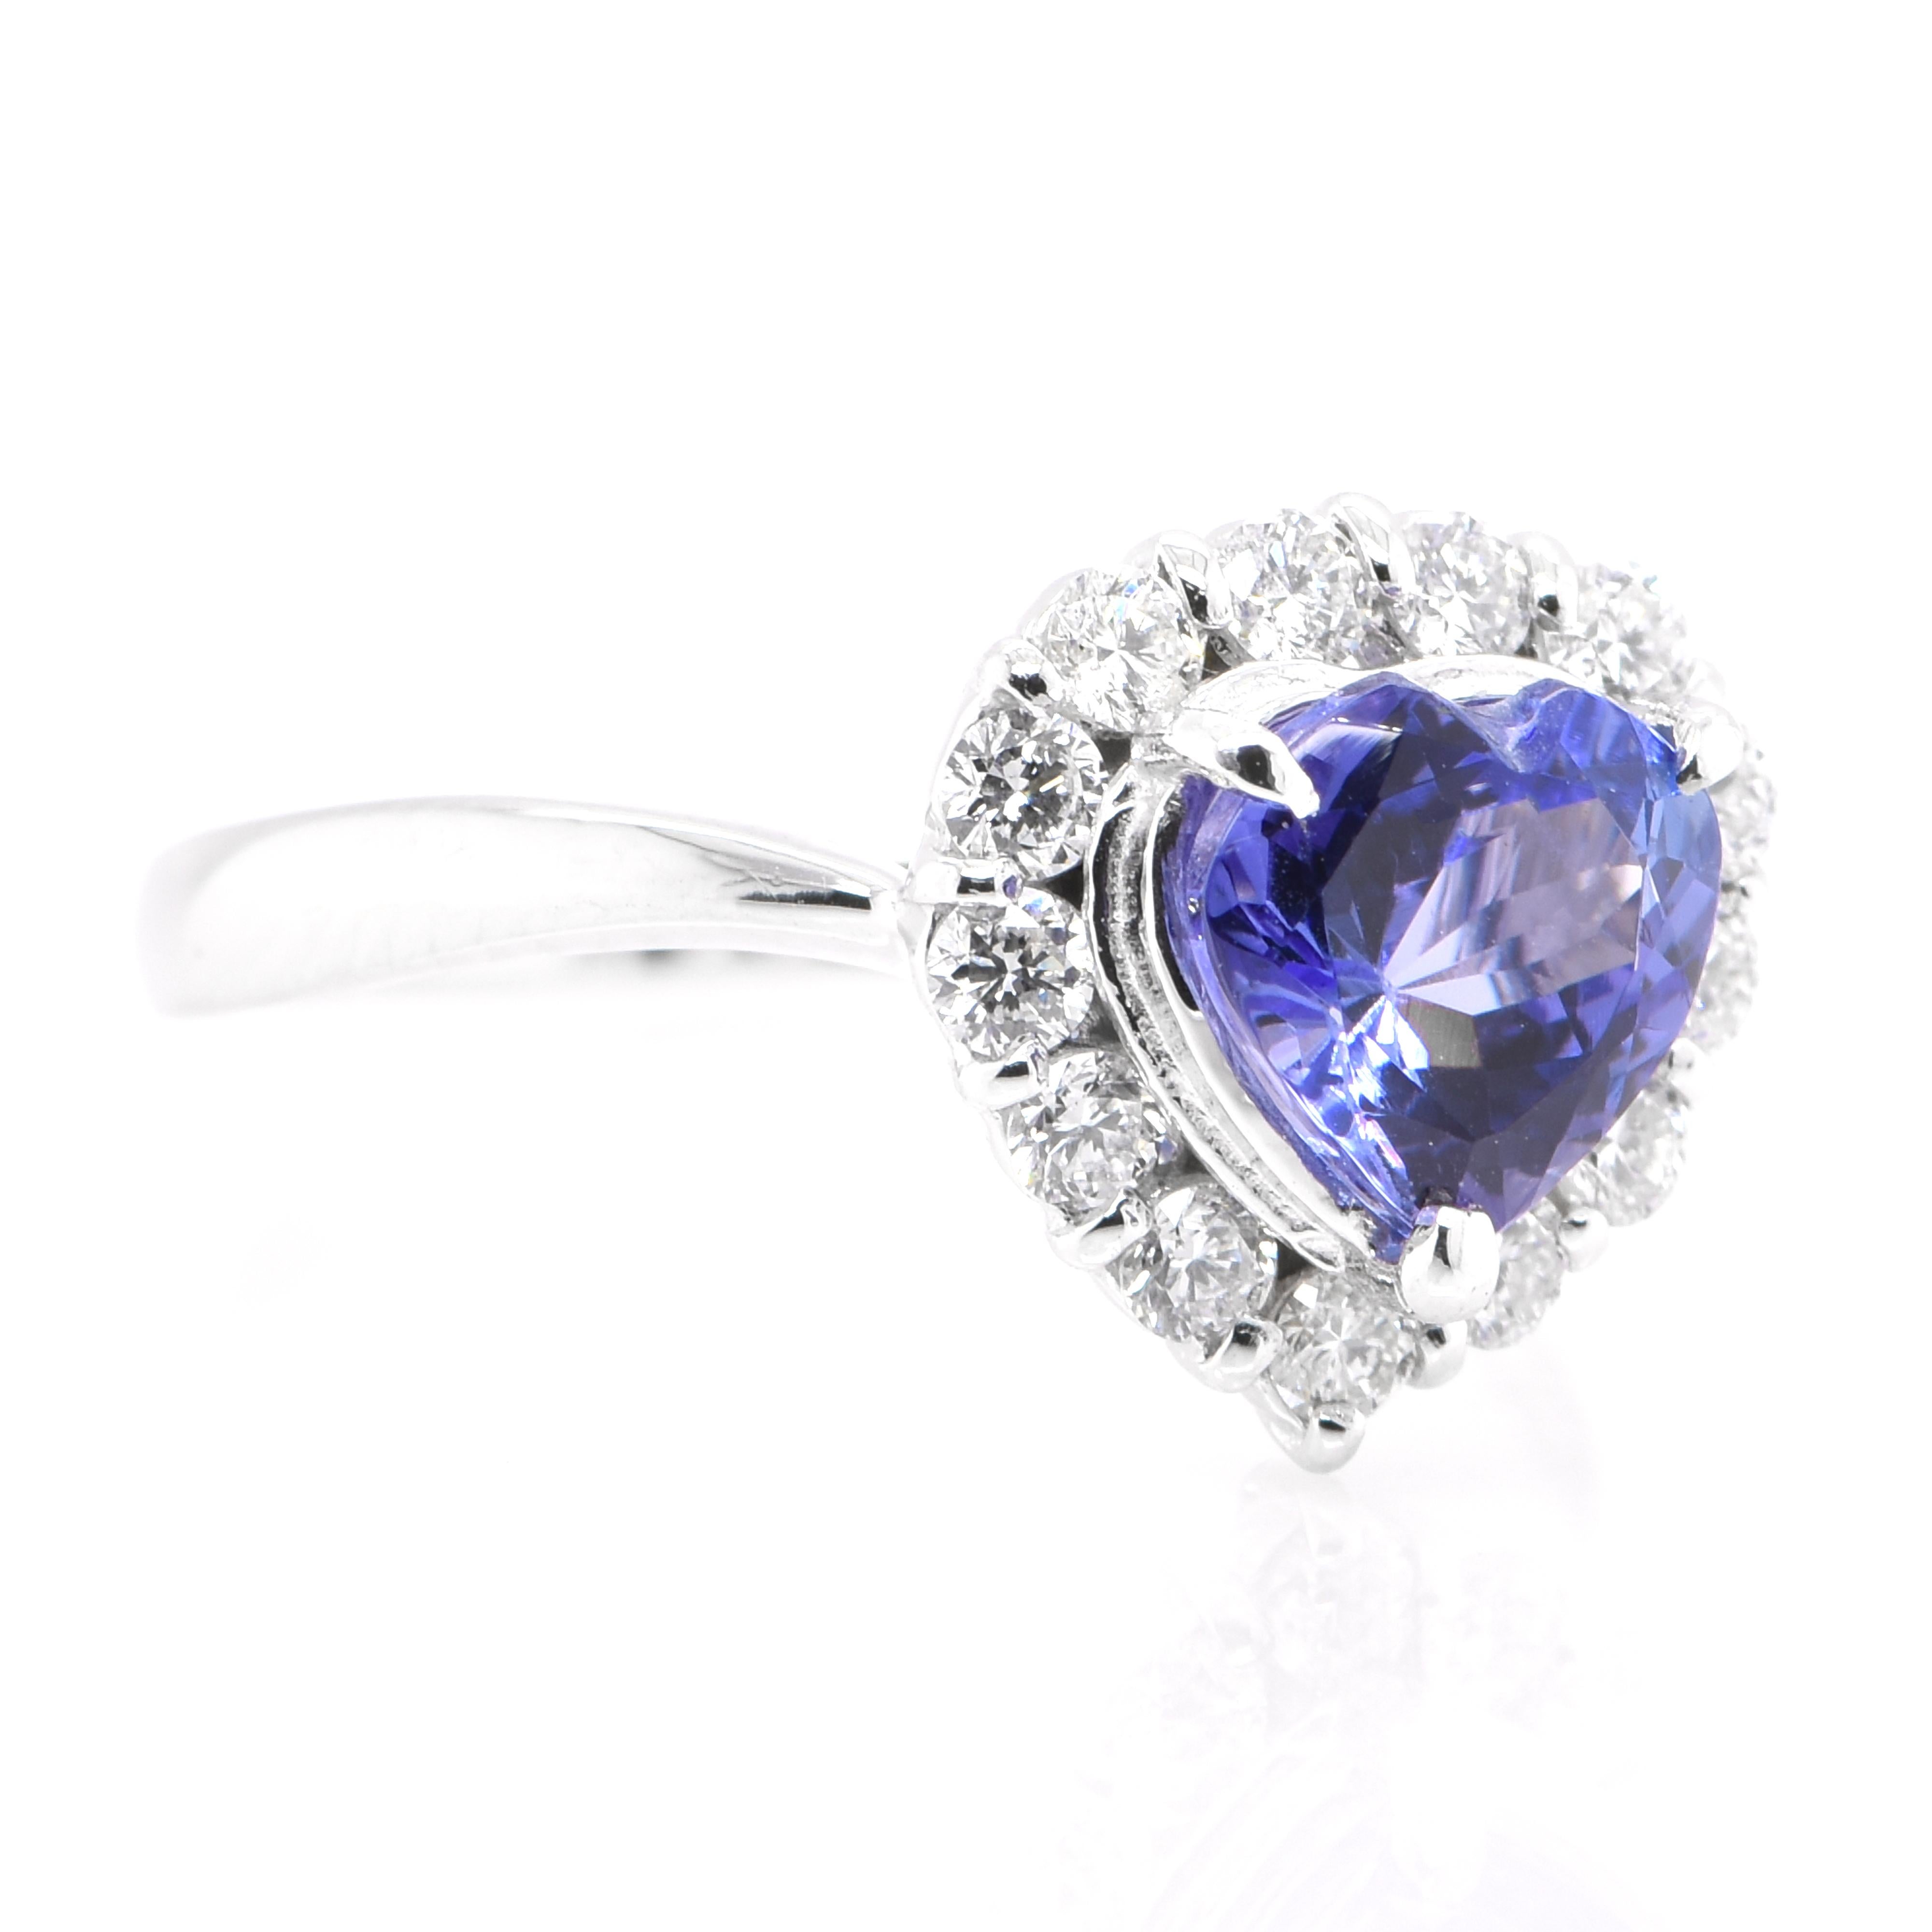 Modern 1.18 Carat Natural Heart Cut Tanzanite & Diamond Engagement Ring Set in Platinum